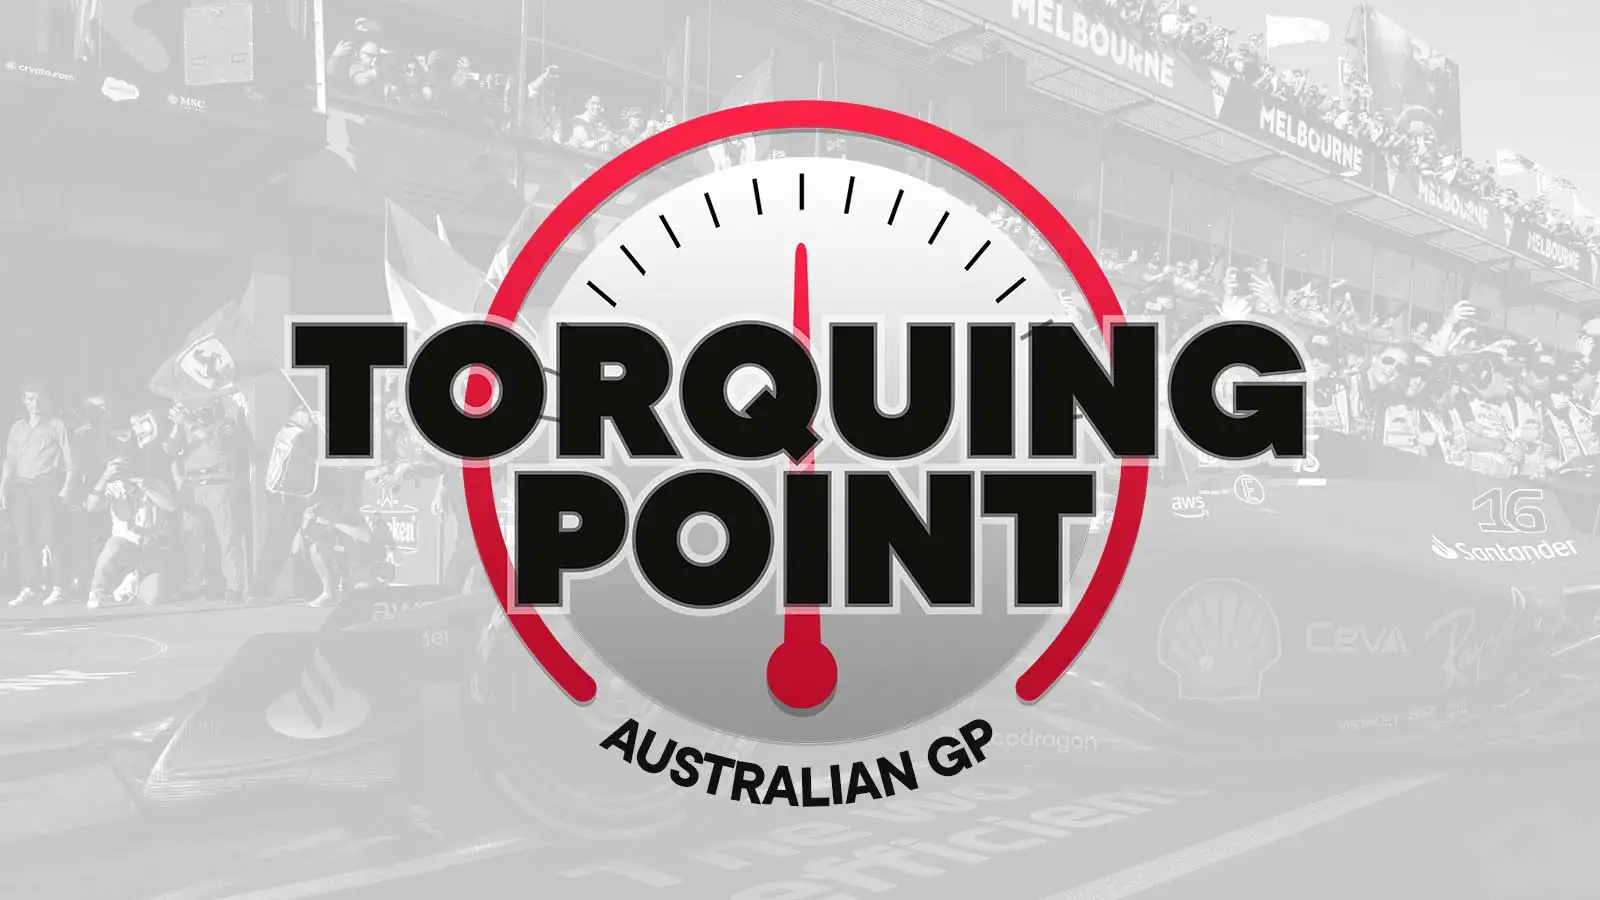 Torquing Point, Australian Grand Prix 2022. Melbourne April 2022.